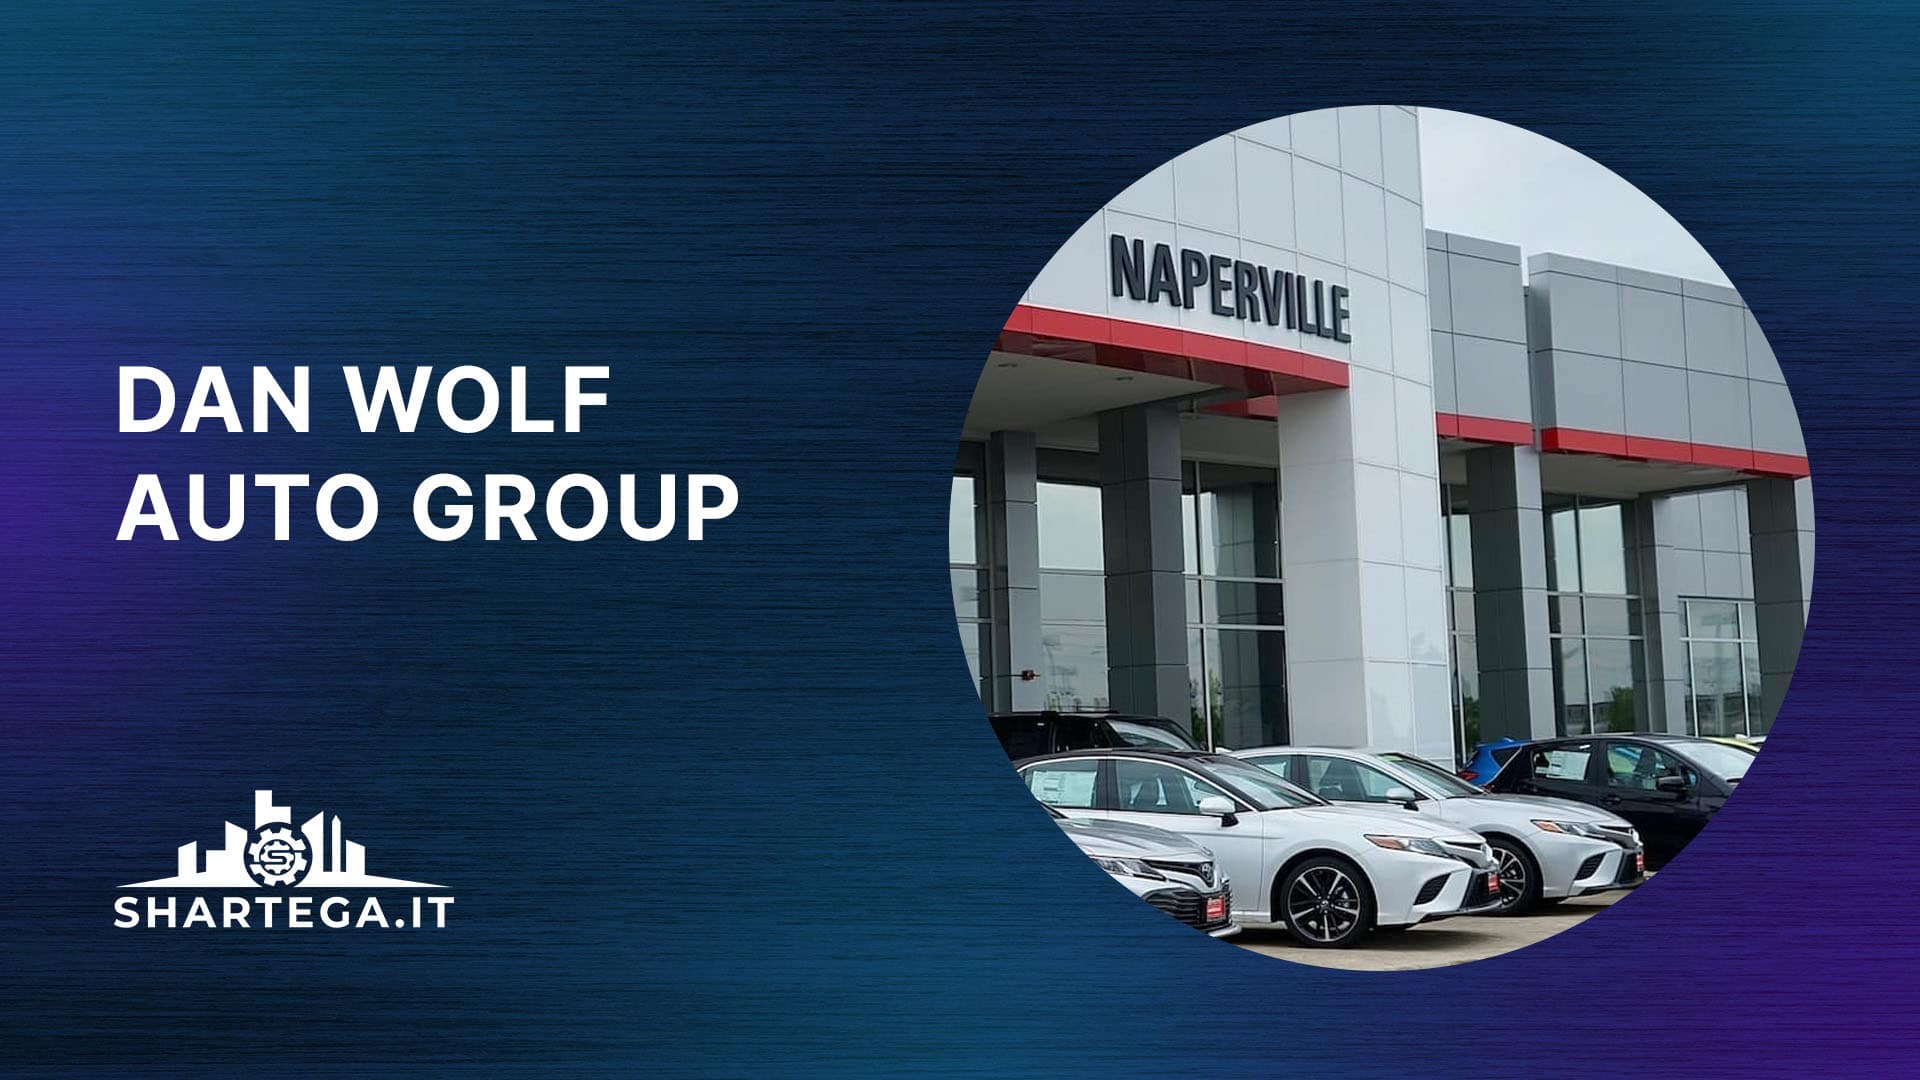 Dan Wolf Auto Group